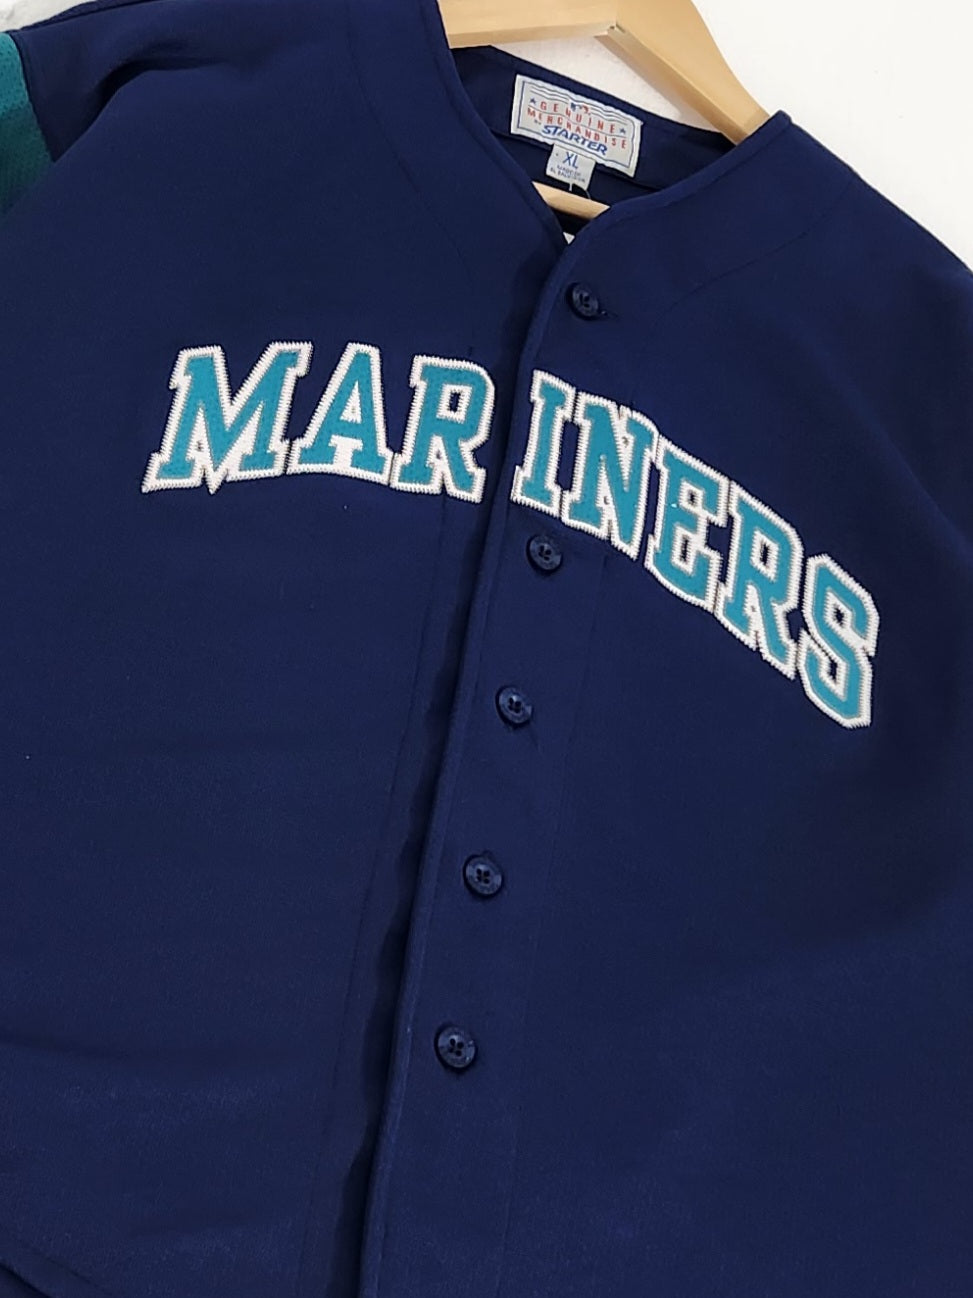 buy mariners jersey